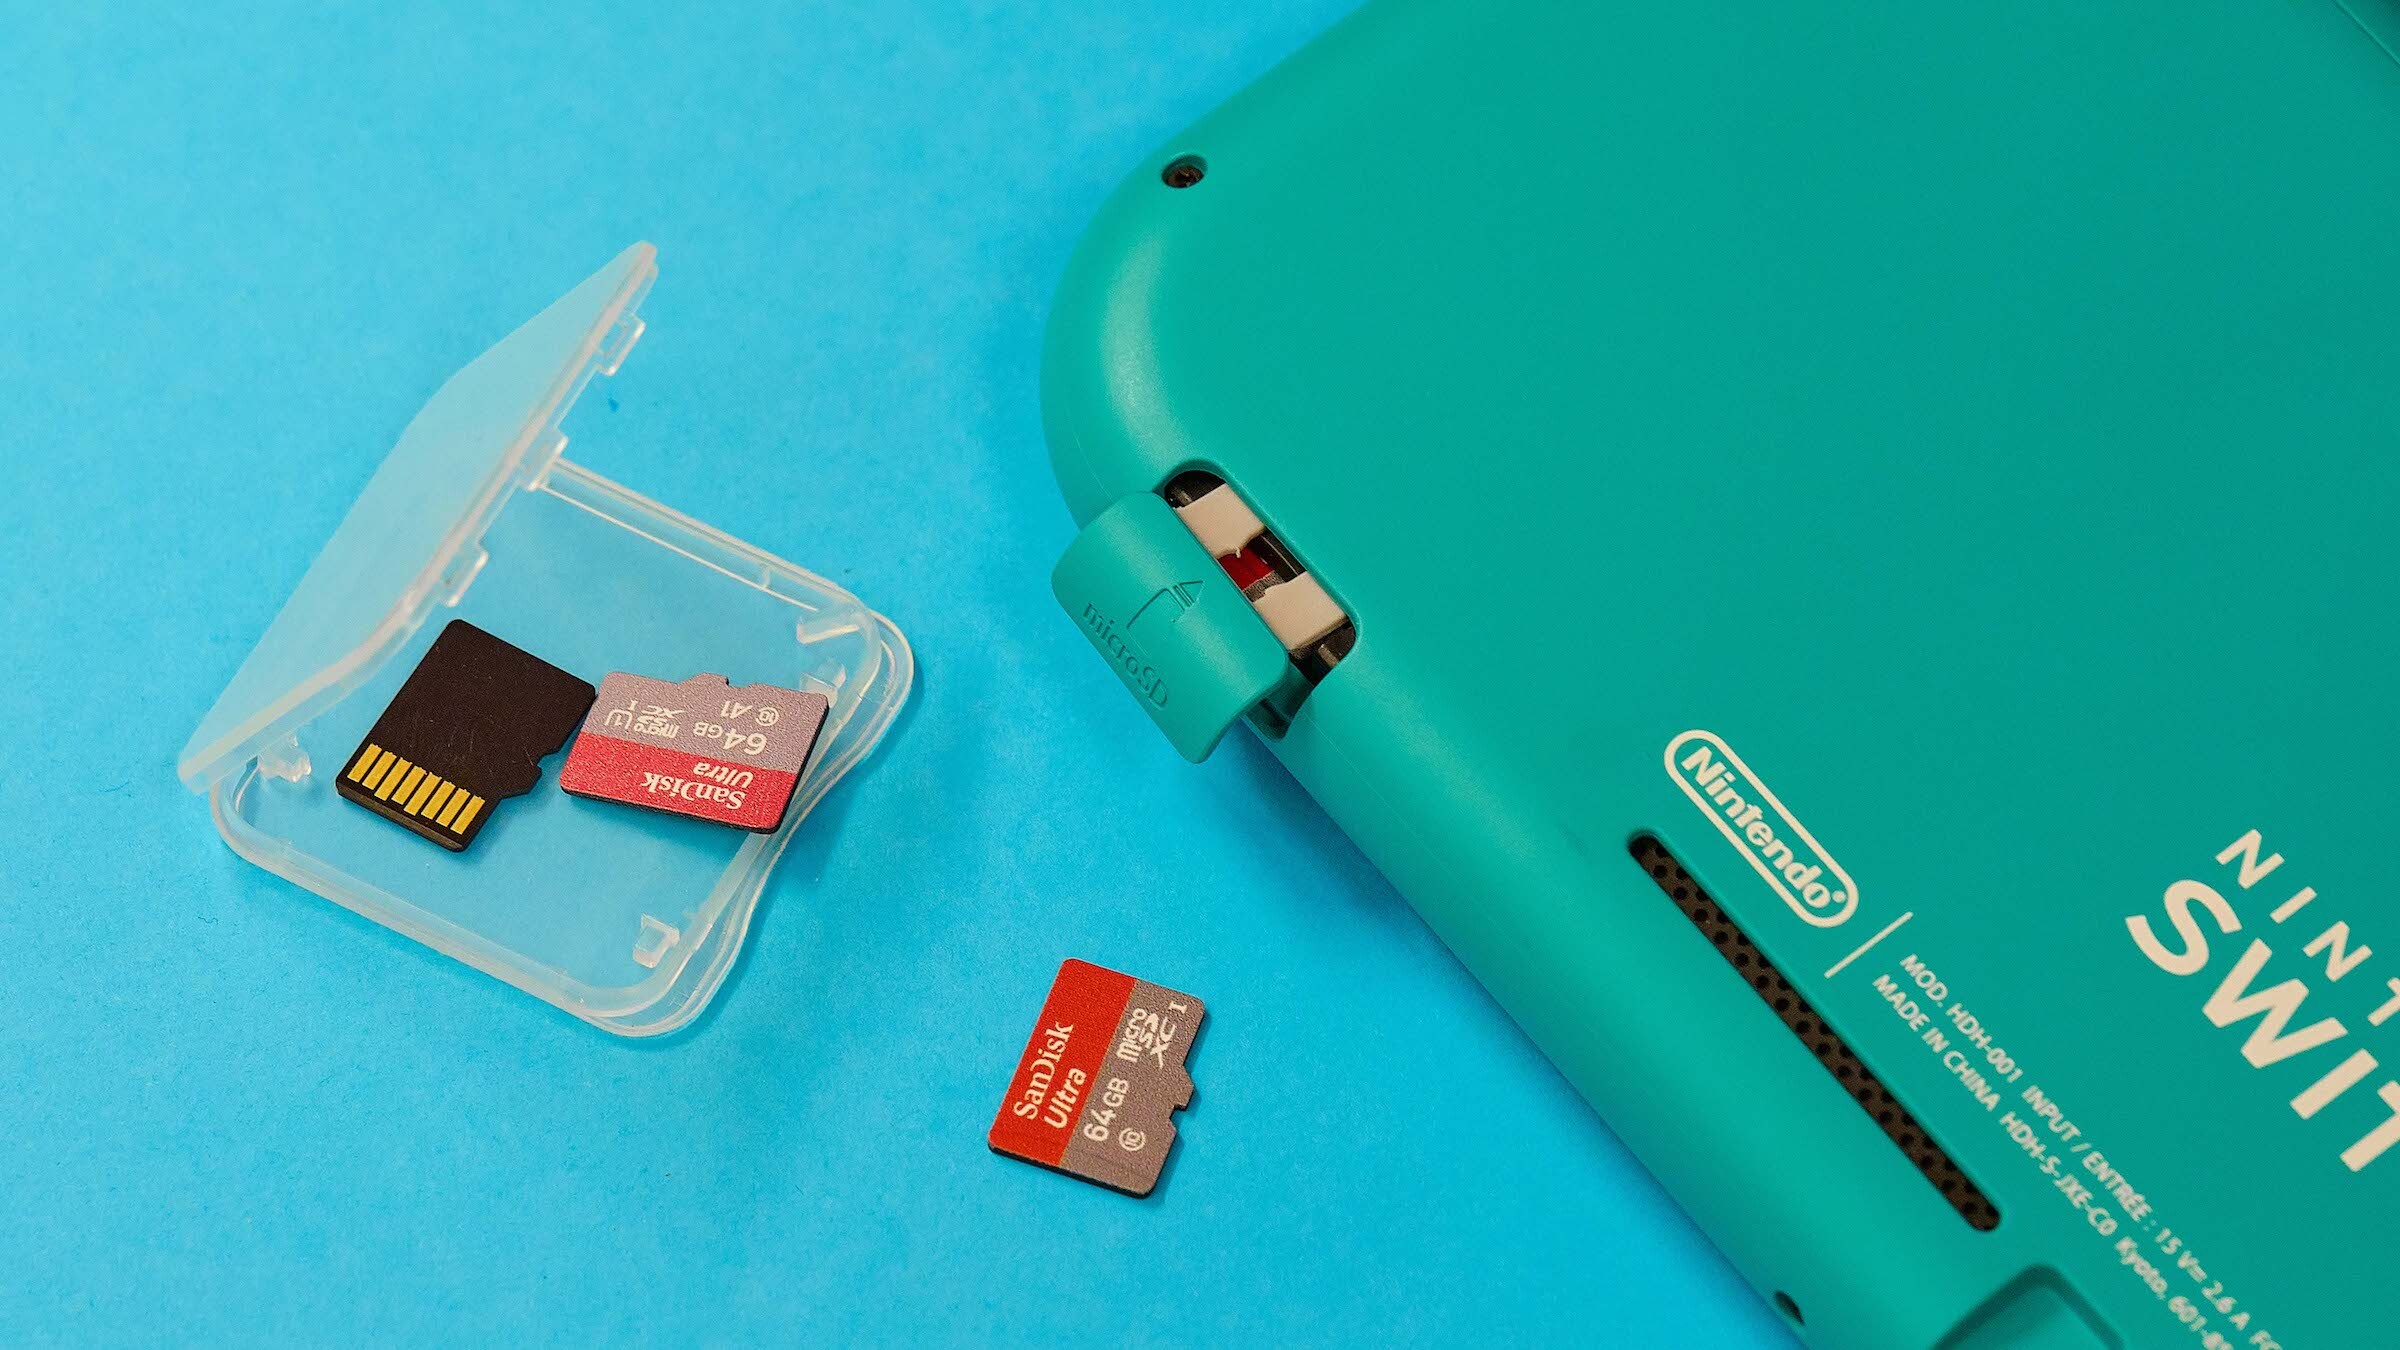 Qué tarjeta microSD me compro para mi Nintendo Switch? La mejor